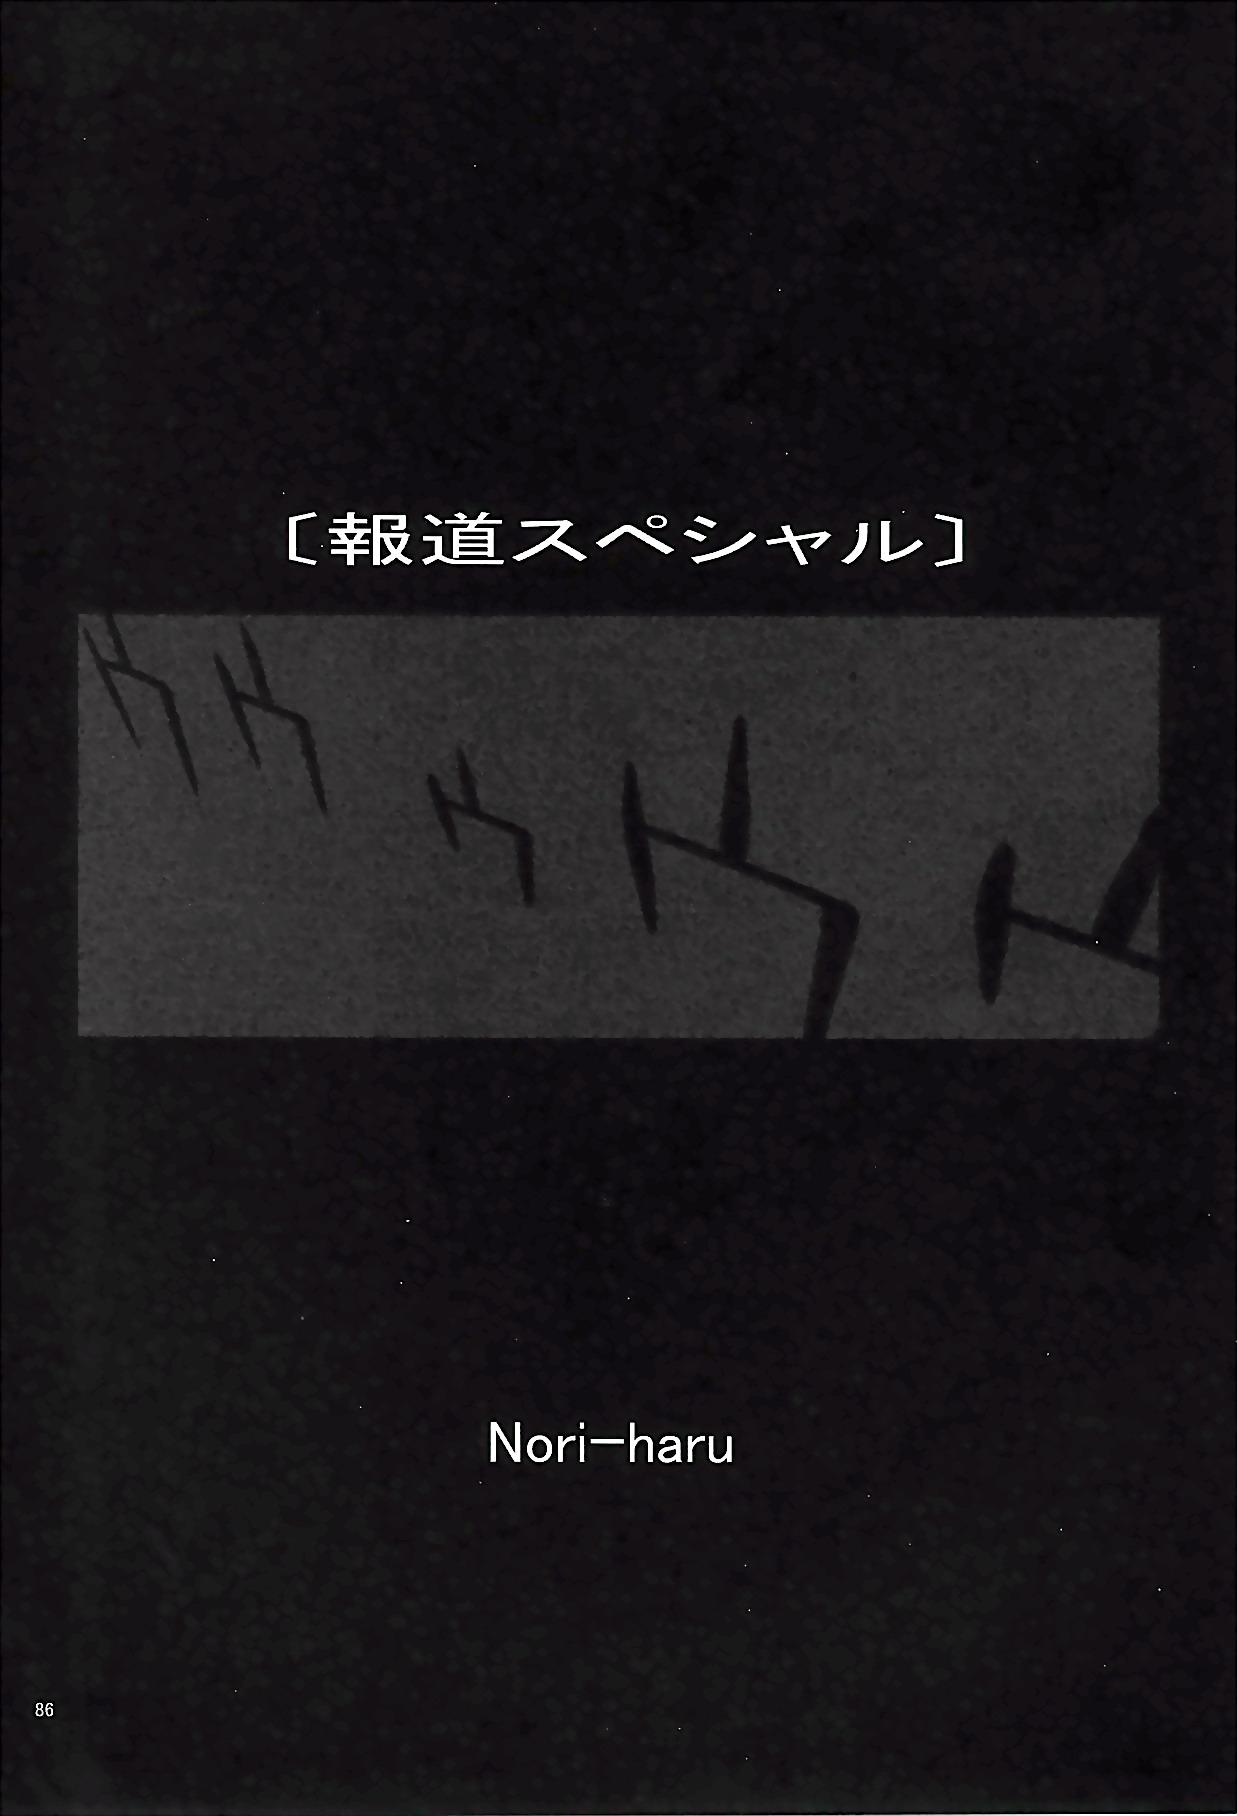 NORI-HARU COMPLETE 1 86